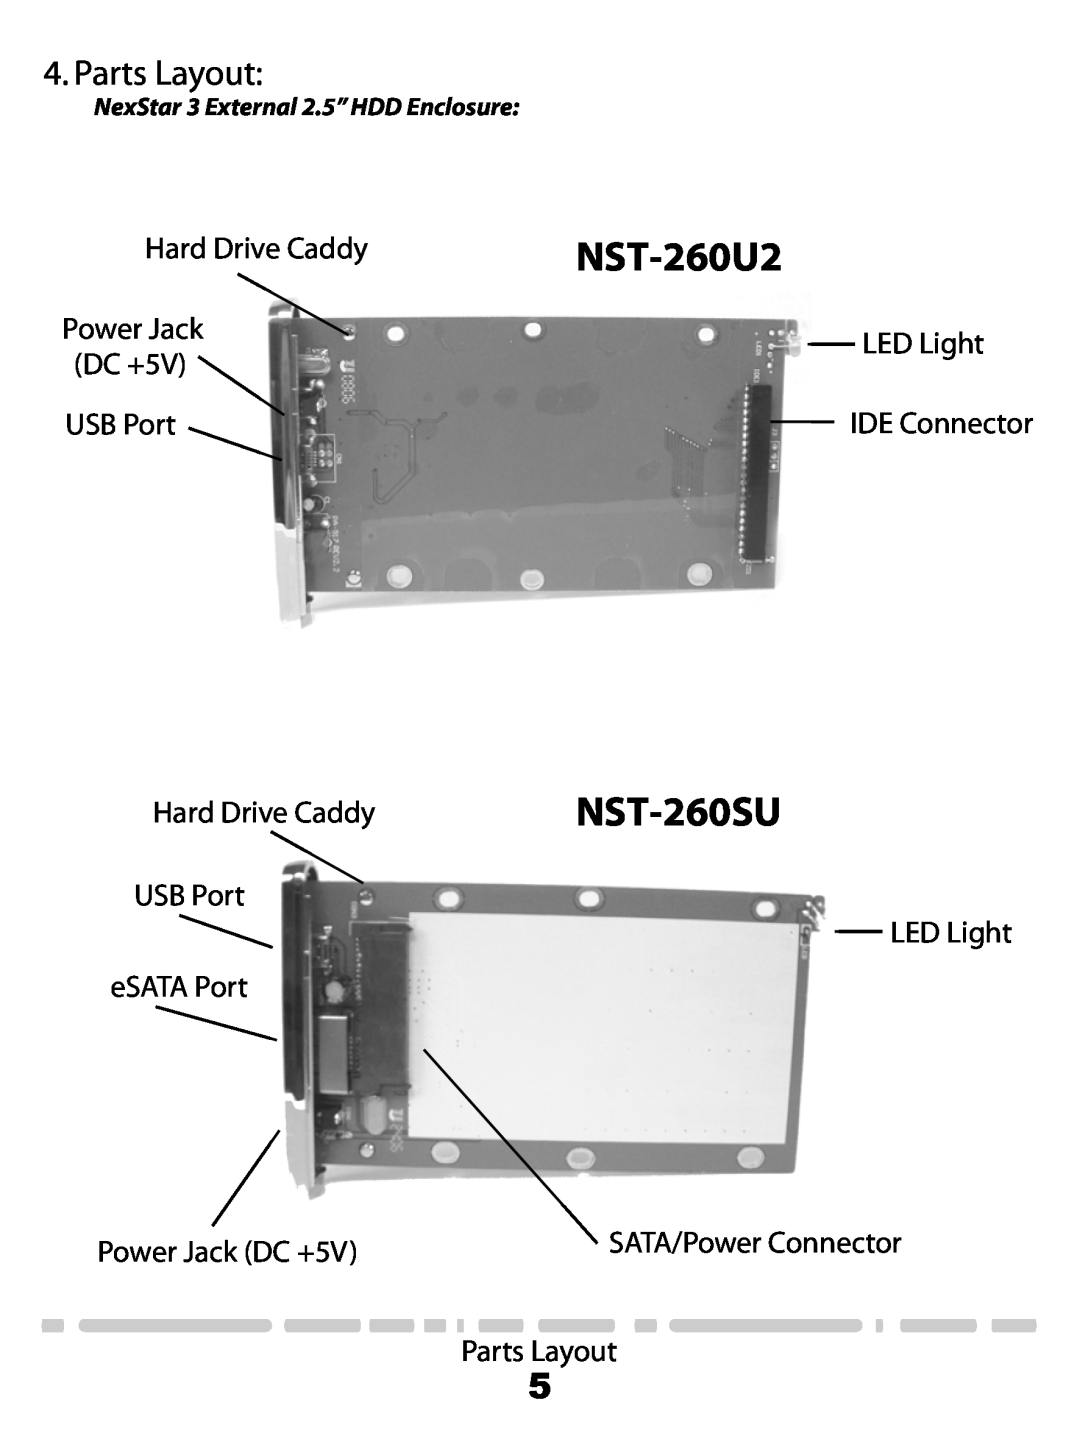 Vantec NST-260U2-RD Parts Layout, USB Port Hard Drive Caddy USB Port eSATA Port, LED Light IDE Connector, NST-260SU 